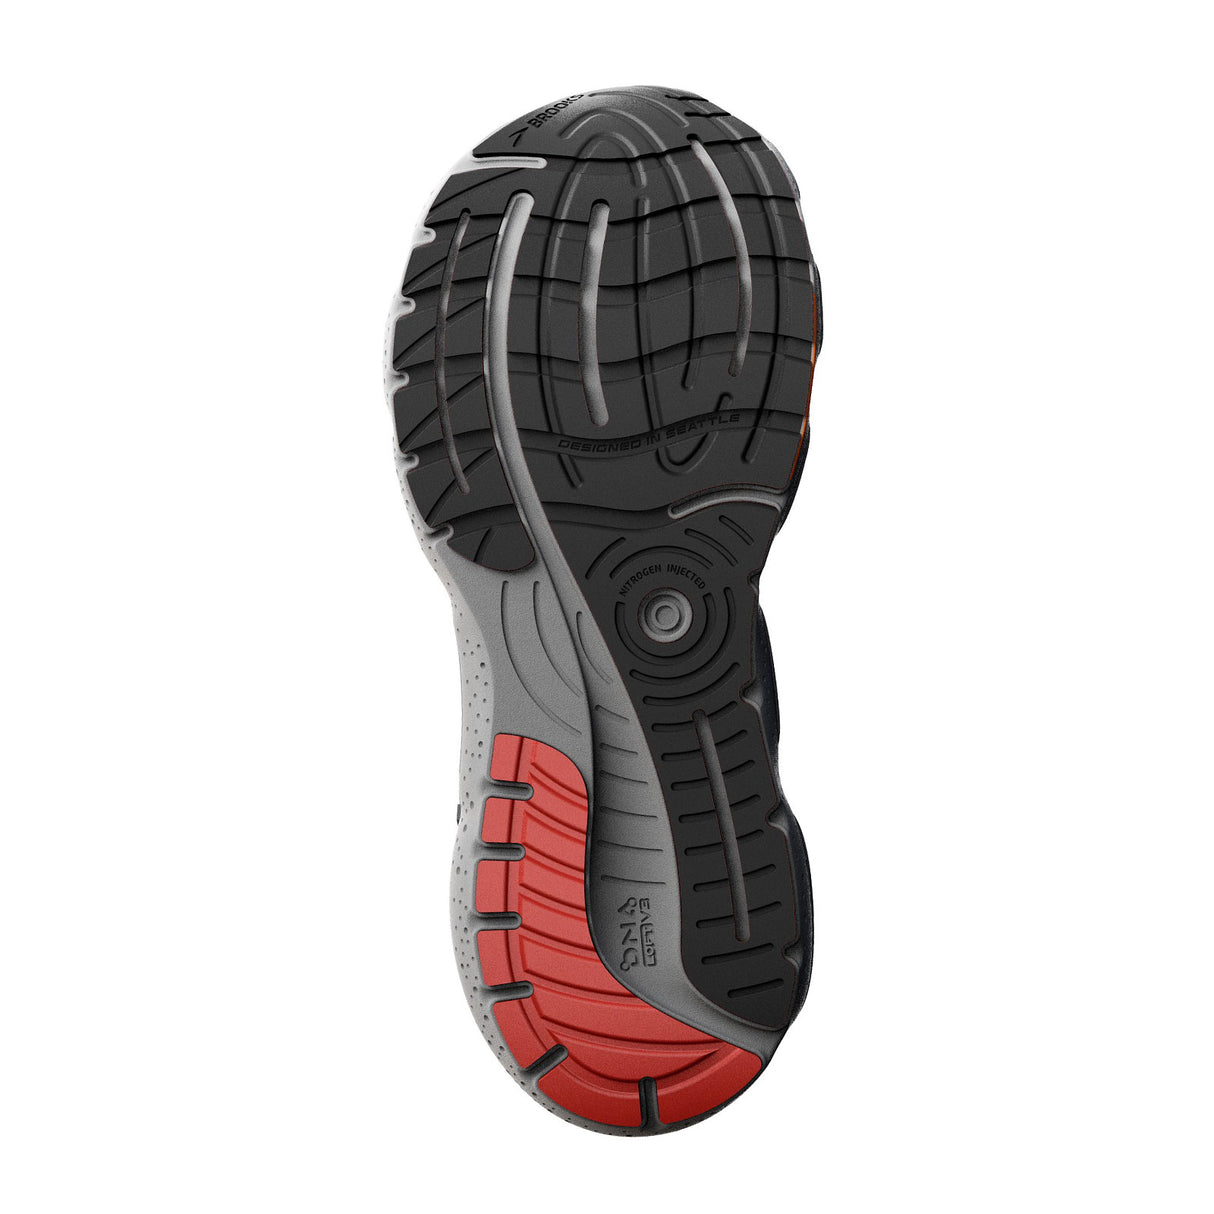 Brooks Glycerin GTS 20 (Men) - Grey/Chili Oil/Orange Athletic - Running - The Heel Shoe Fitters